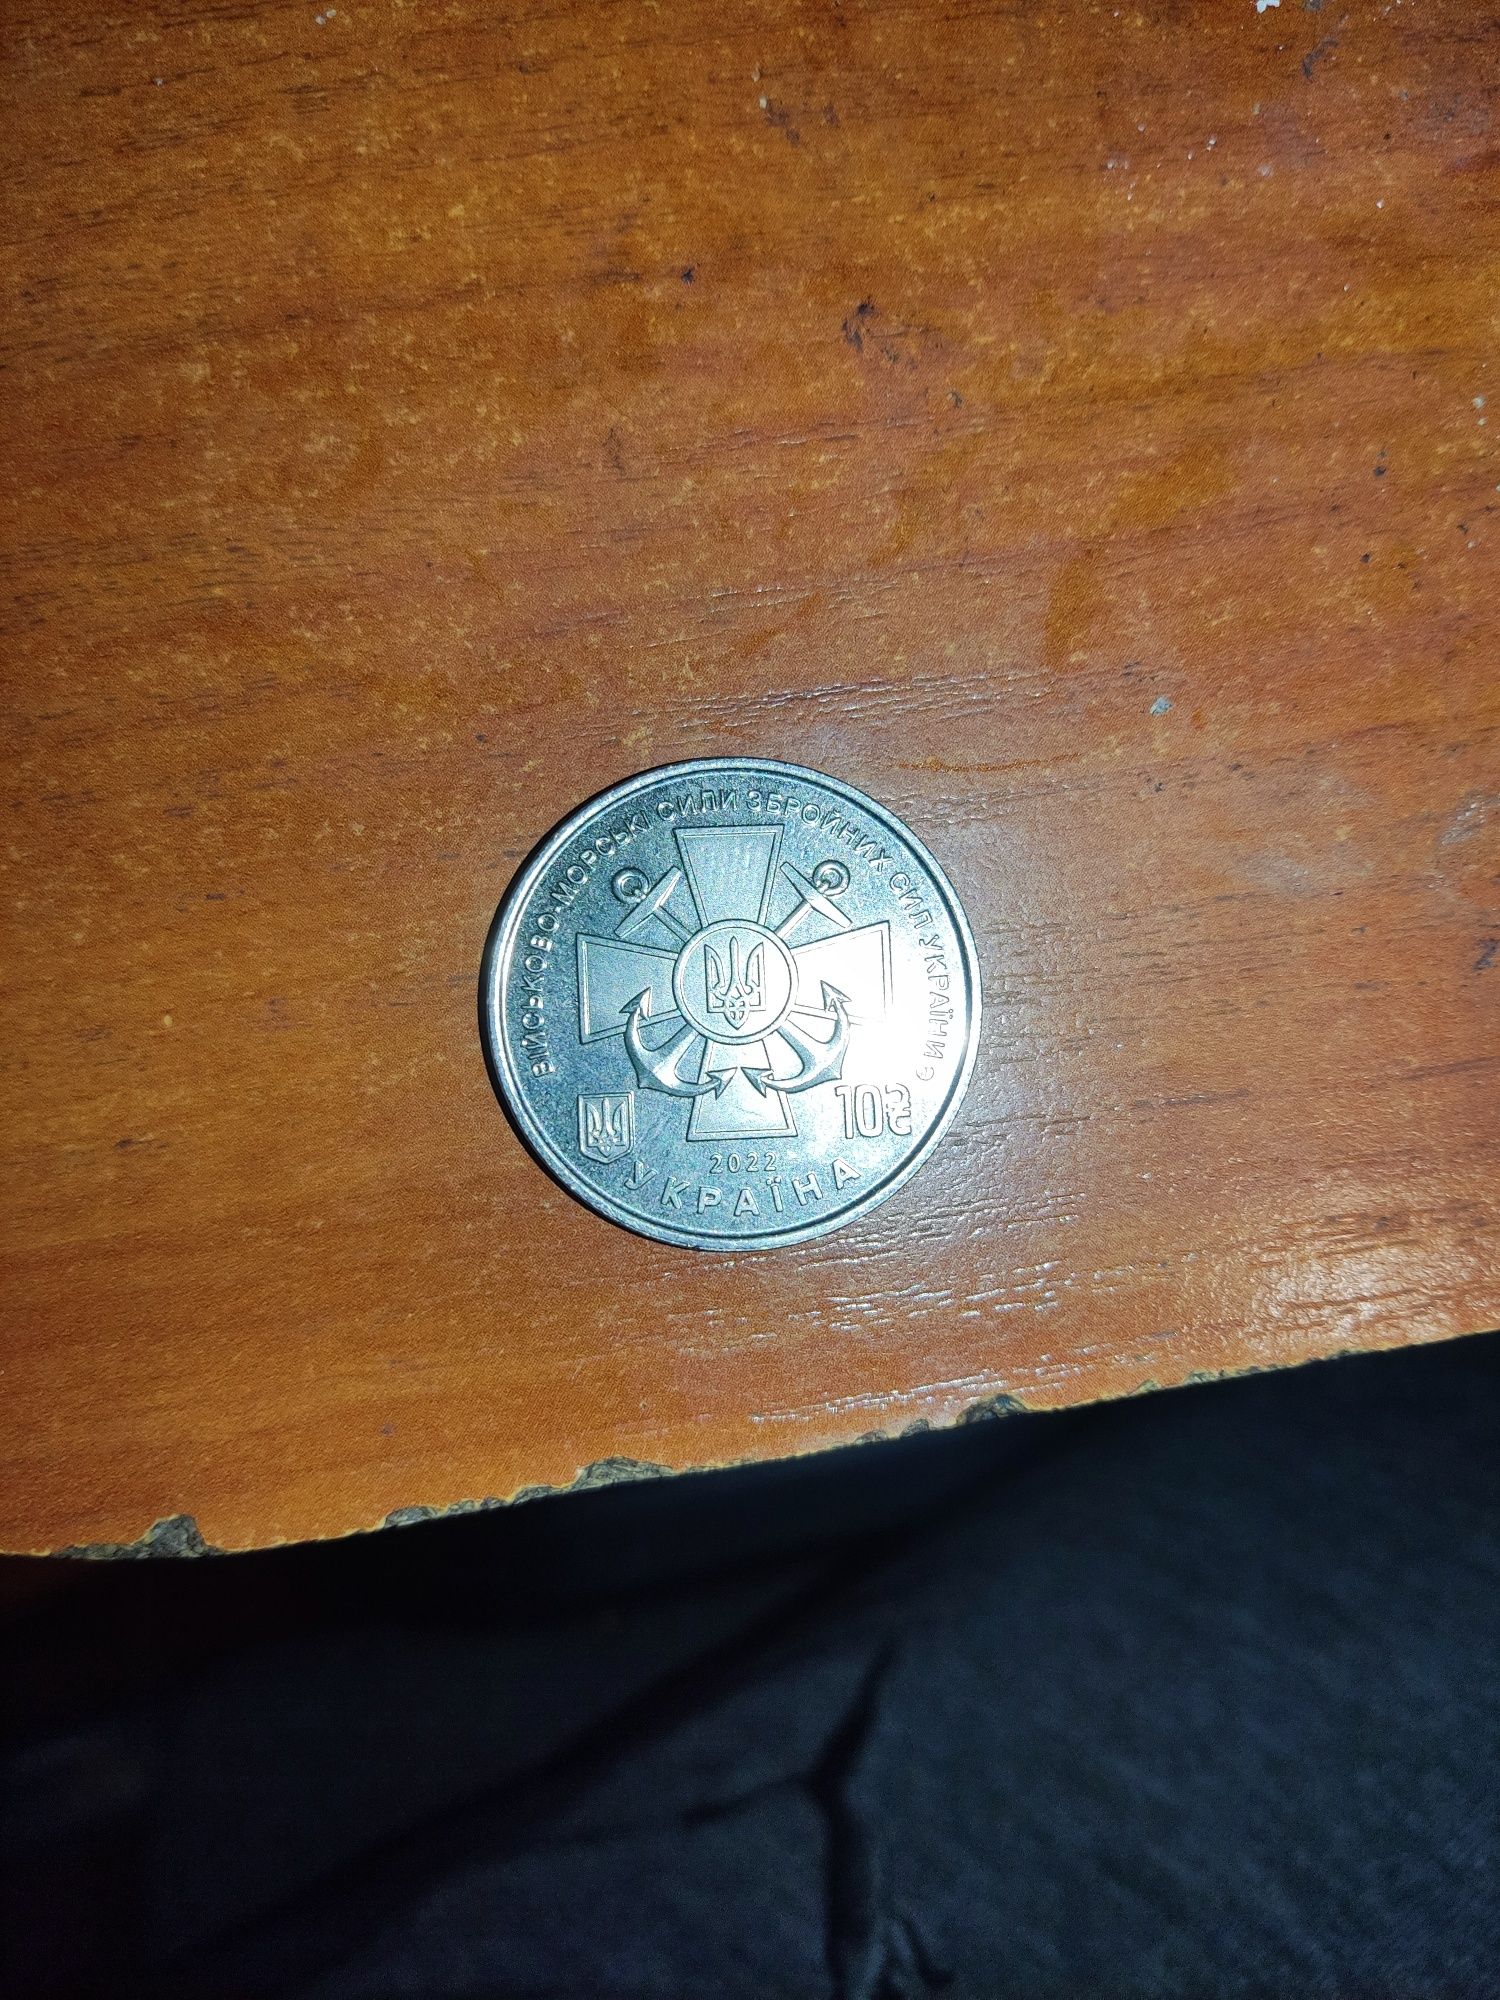 Купюра 20 грн, и 2 монеты с тро и одна 10 грн